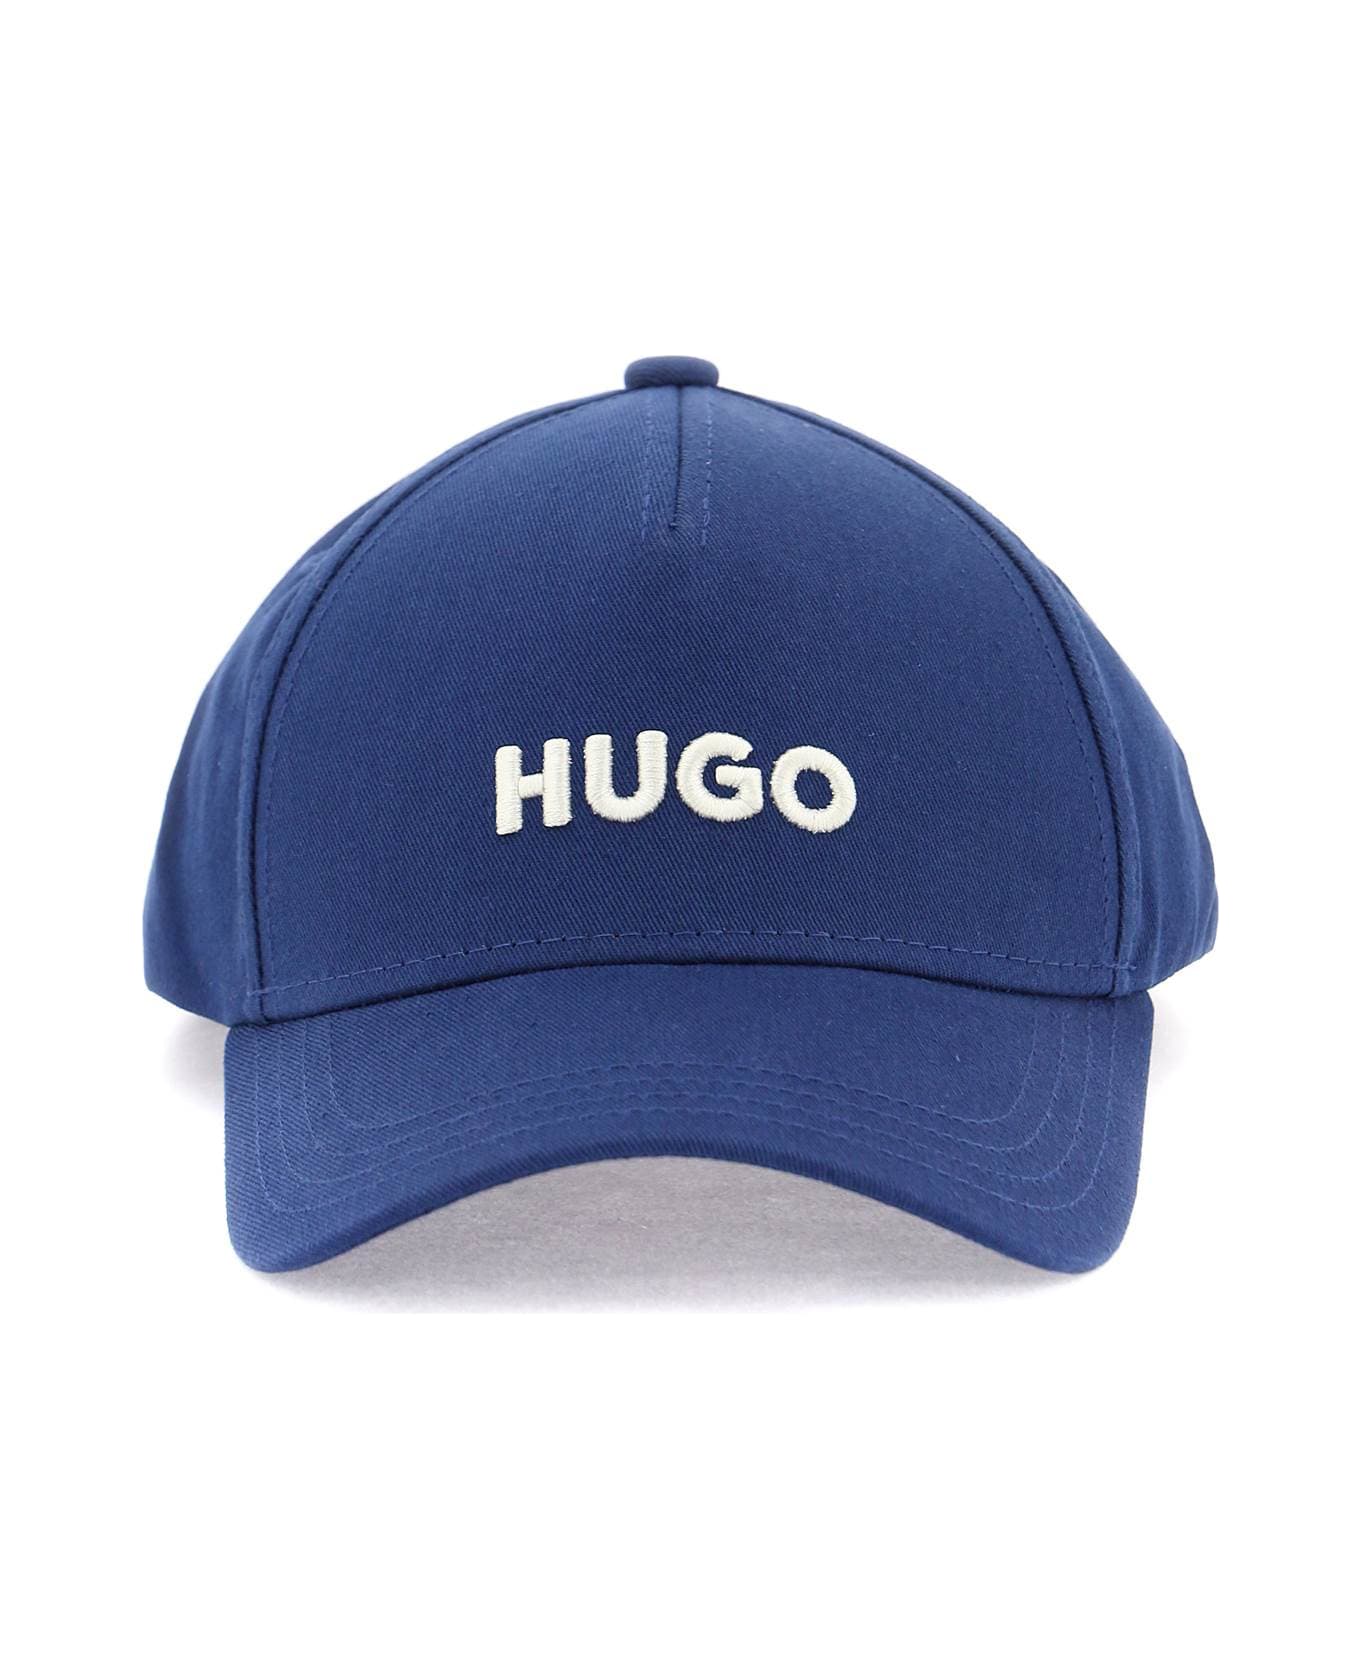 Hugo Boss Baseball Cap With Embroidered Logo - NAVY (Blue)